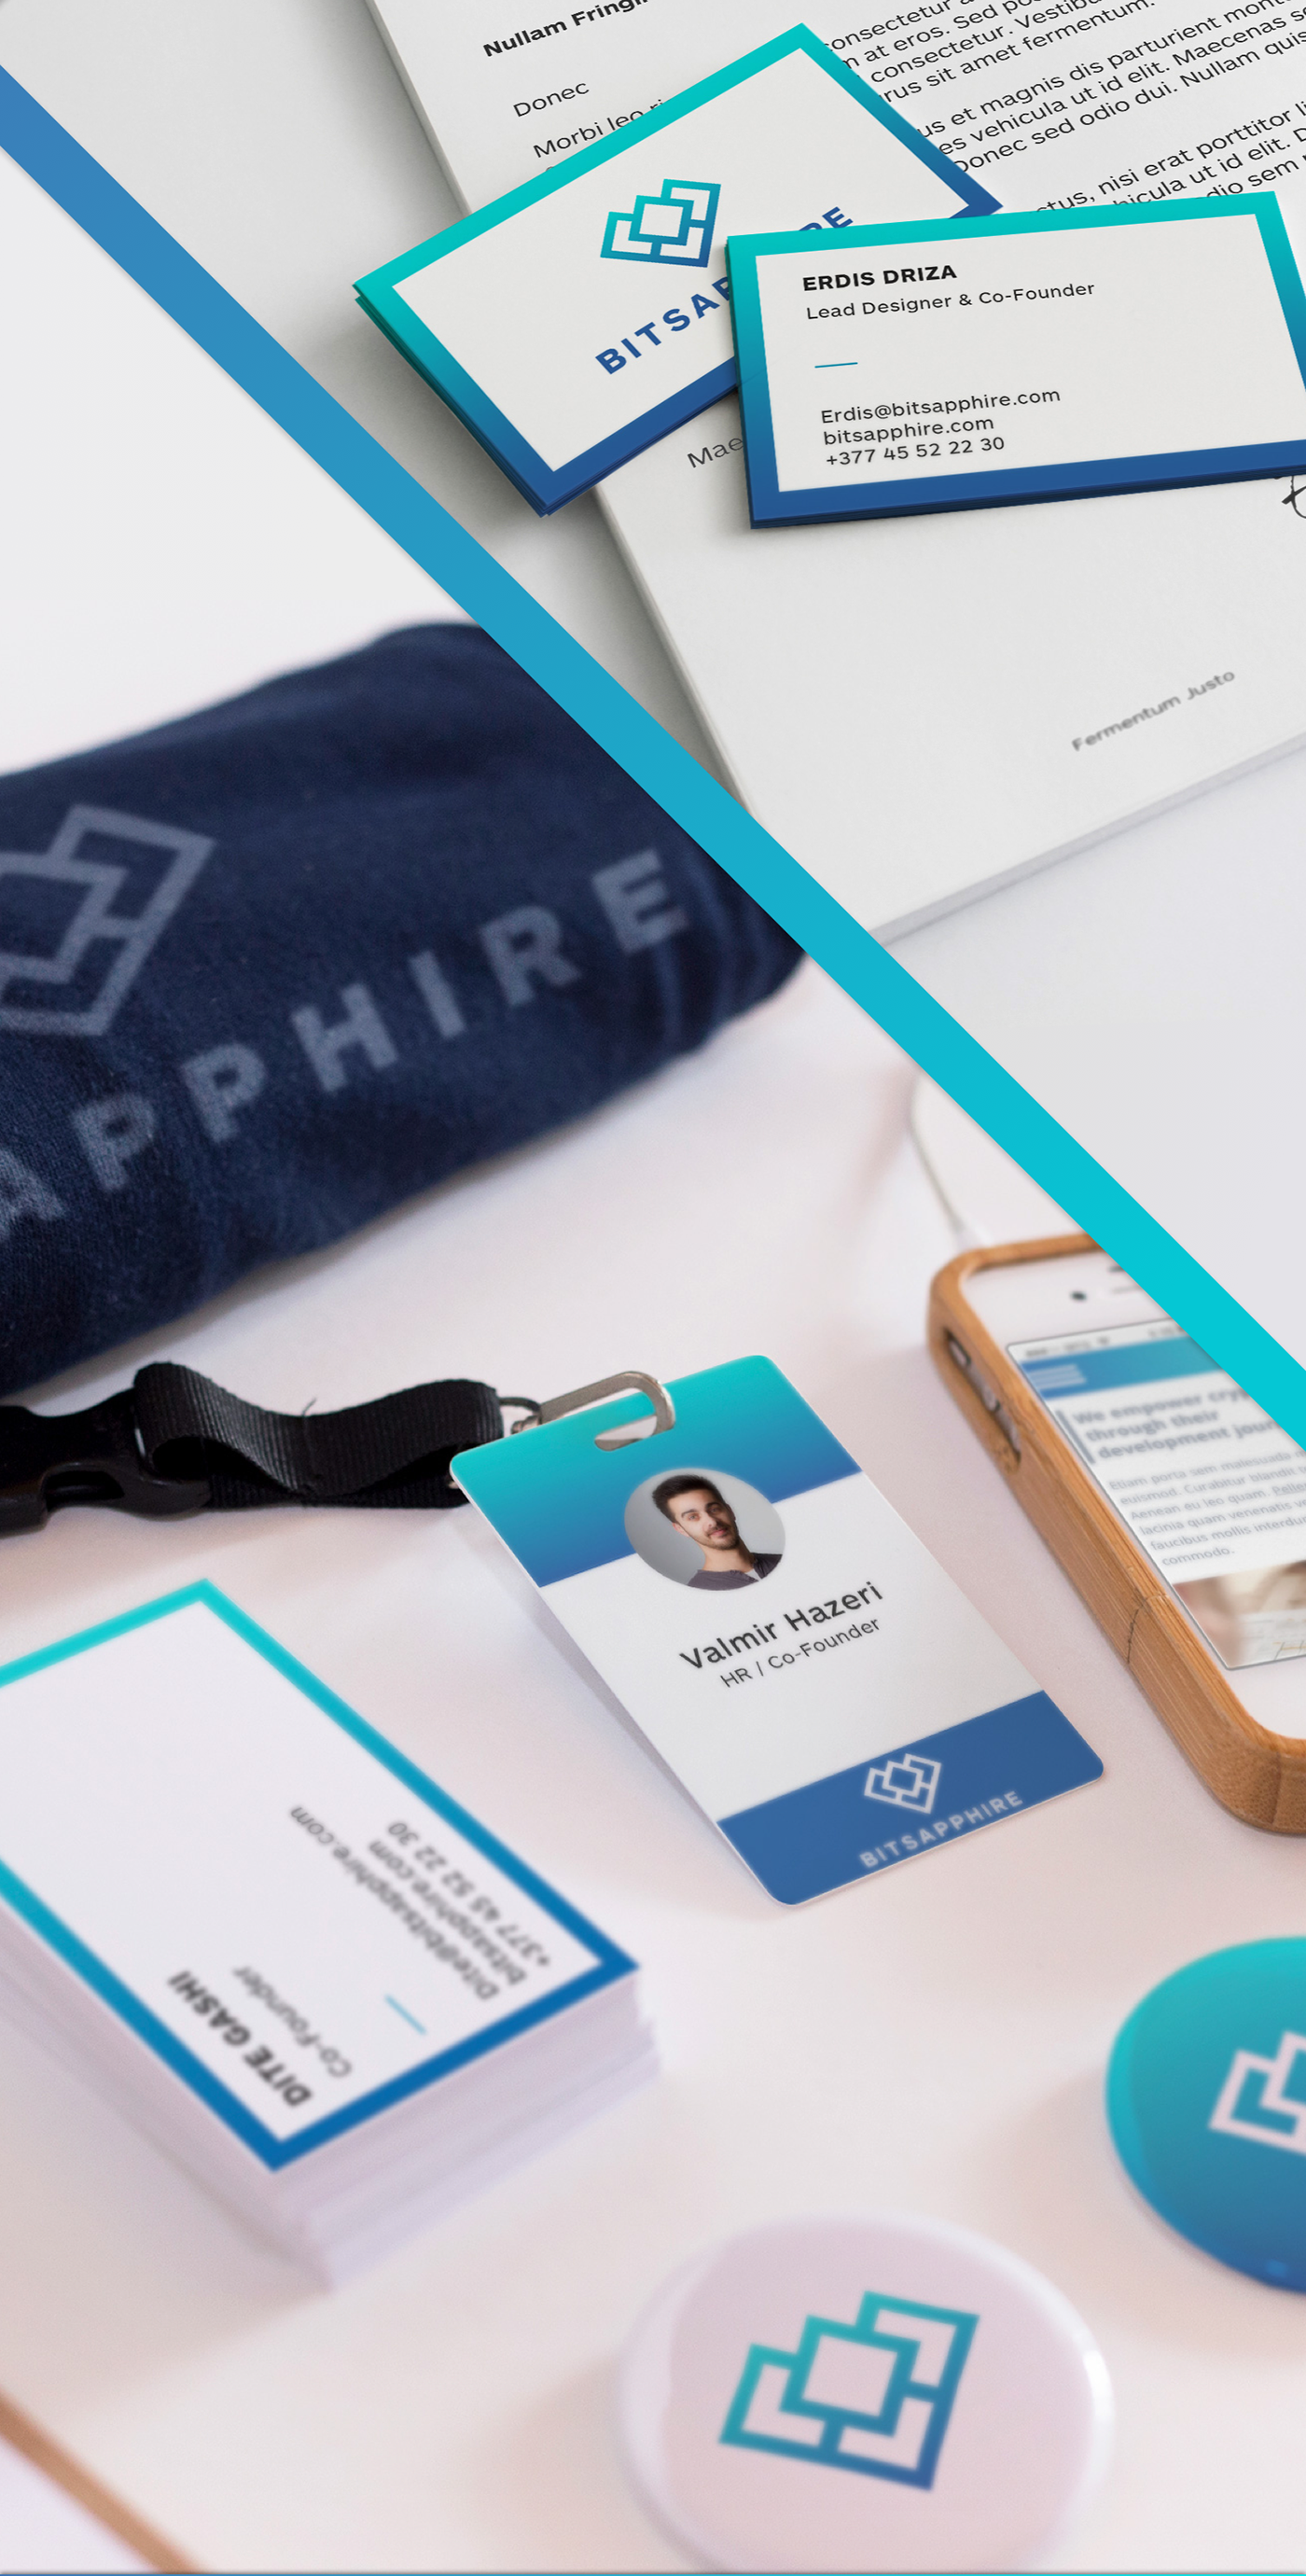 bitsapphire crypto Startup cryptocurrency Webapps brand Webdesign